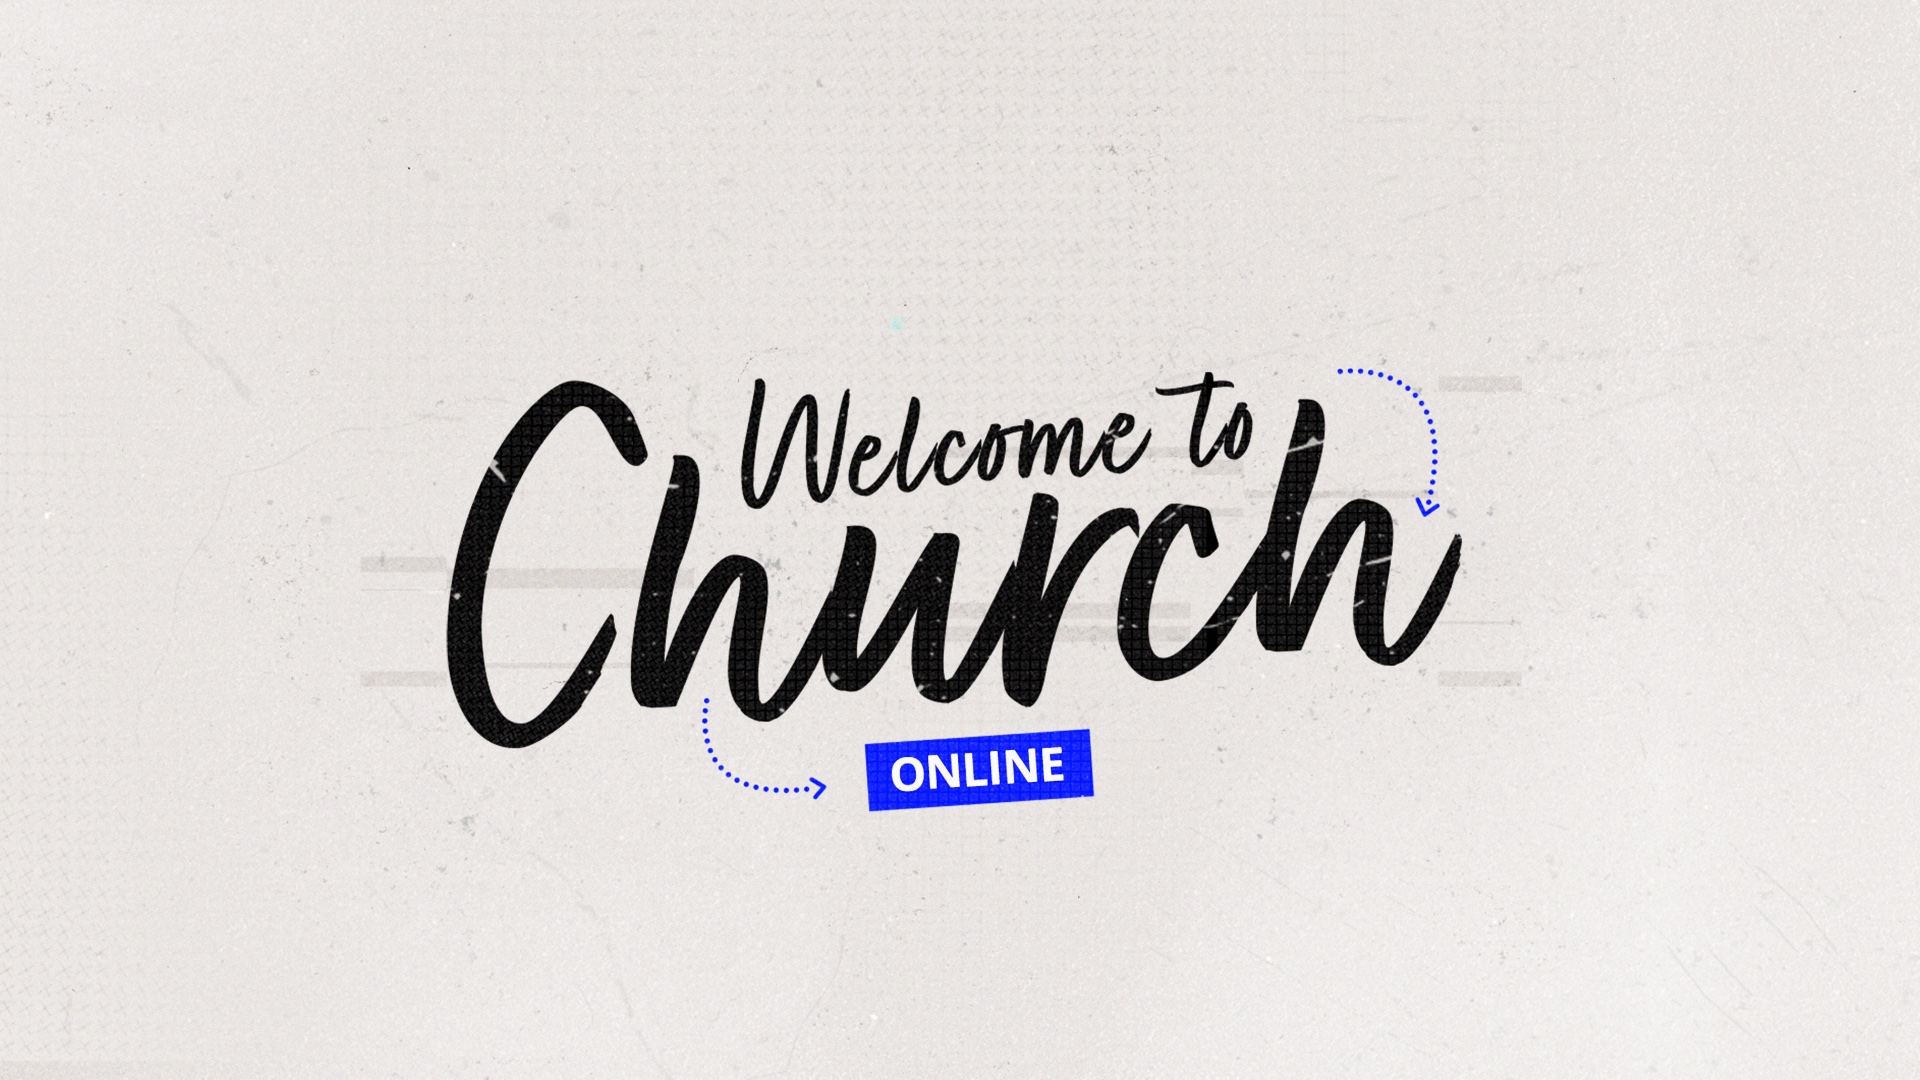 Welcome to church online - Grace Christian Fellowship - Odessa, TX